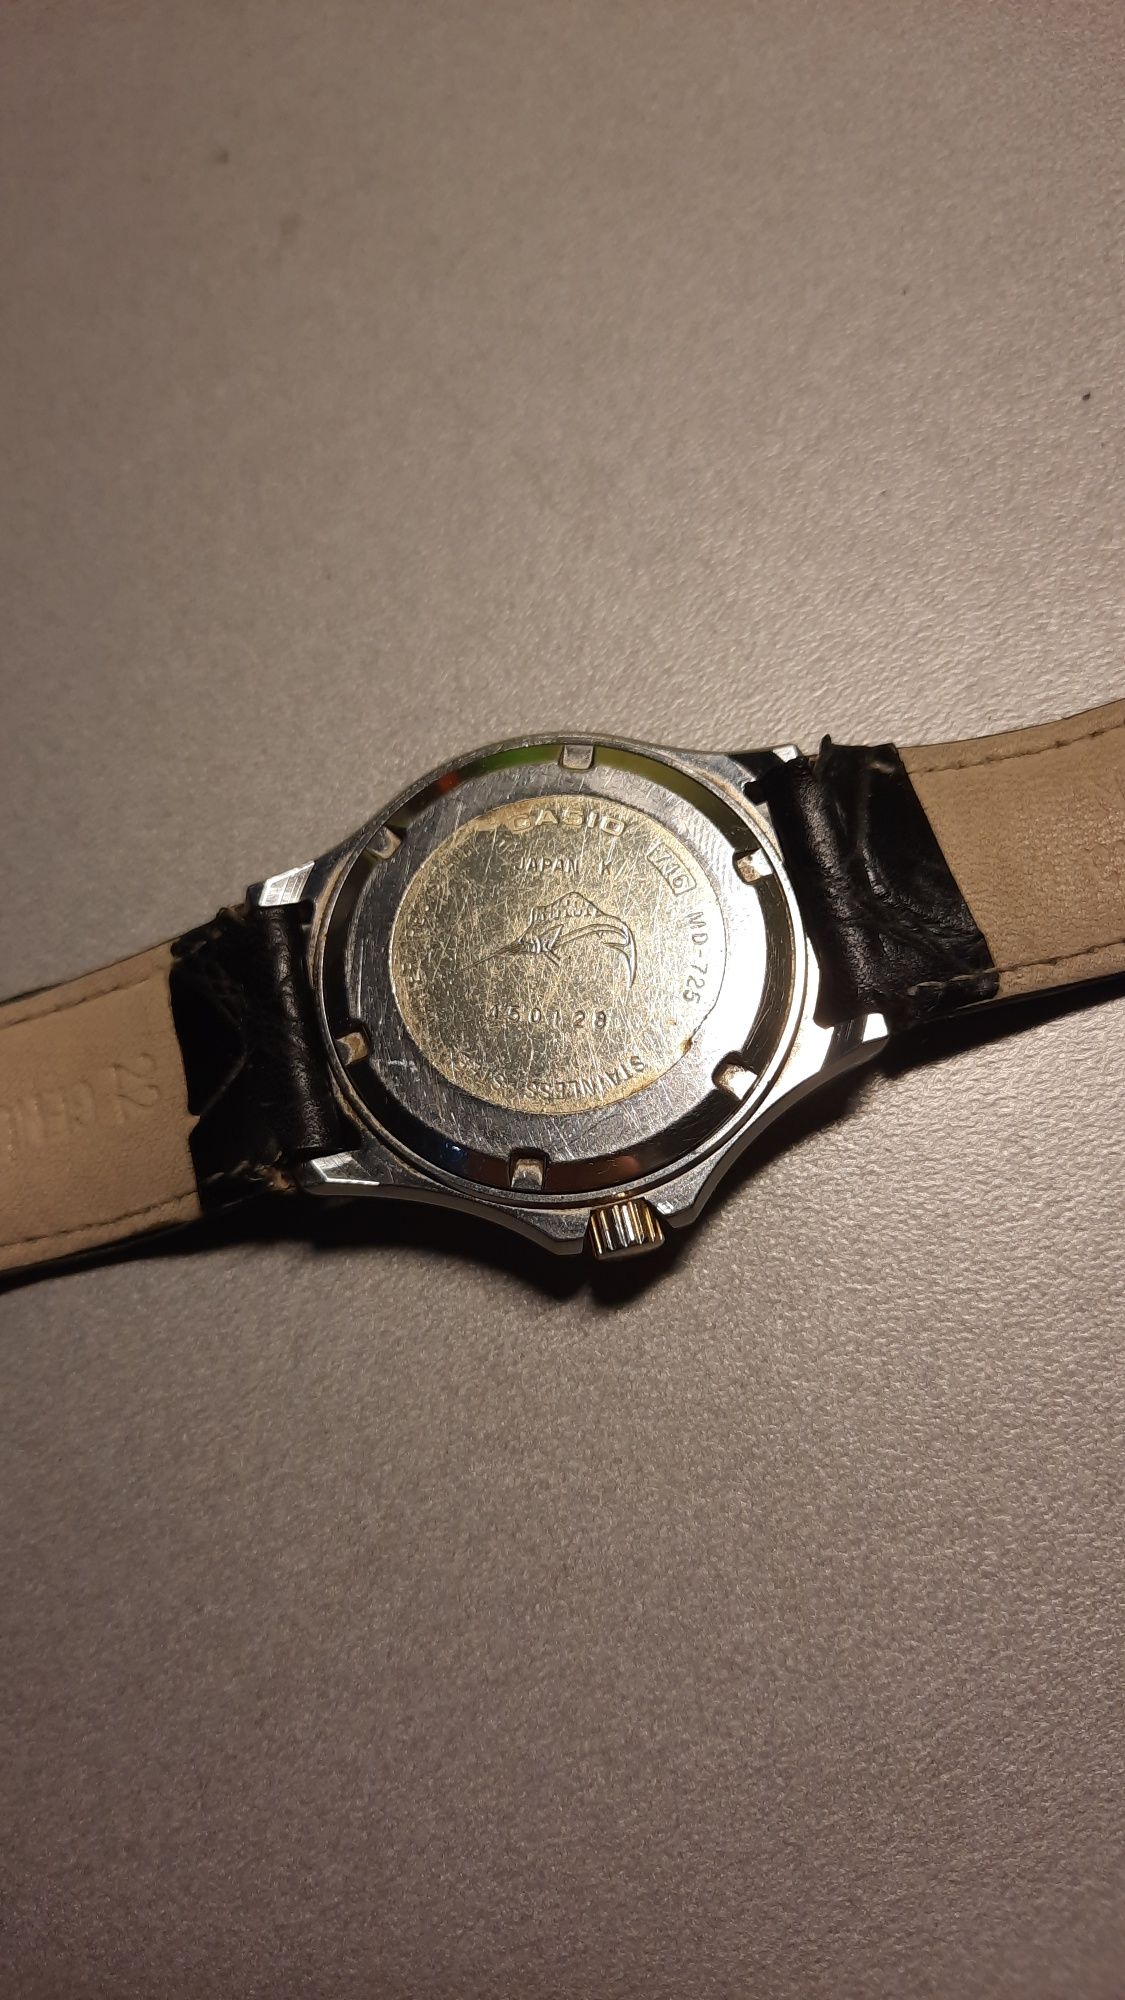 Часы Casio MD-725 оригинал антикварные винтаж ,200м, кварц